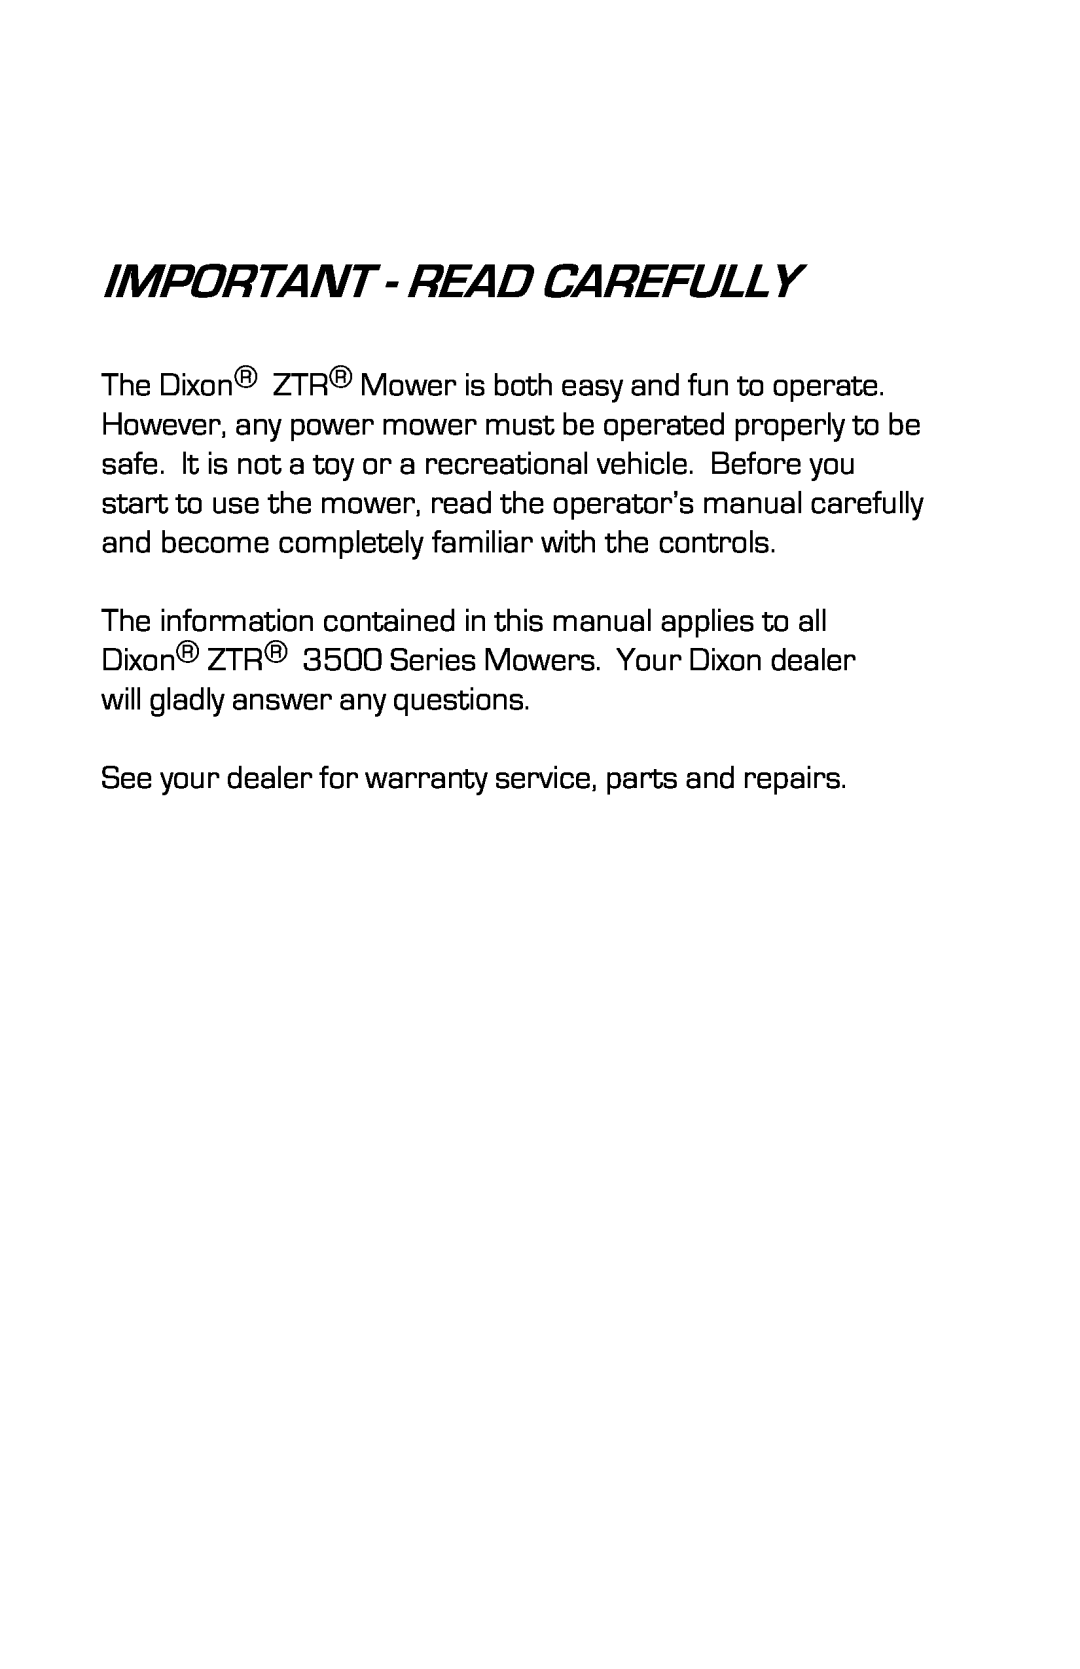 Dixon 3500 Series manual Important - Read Carefully 